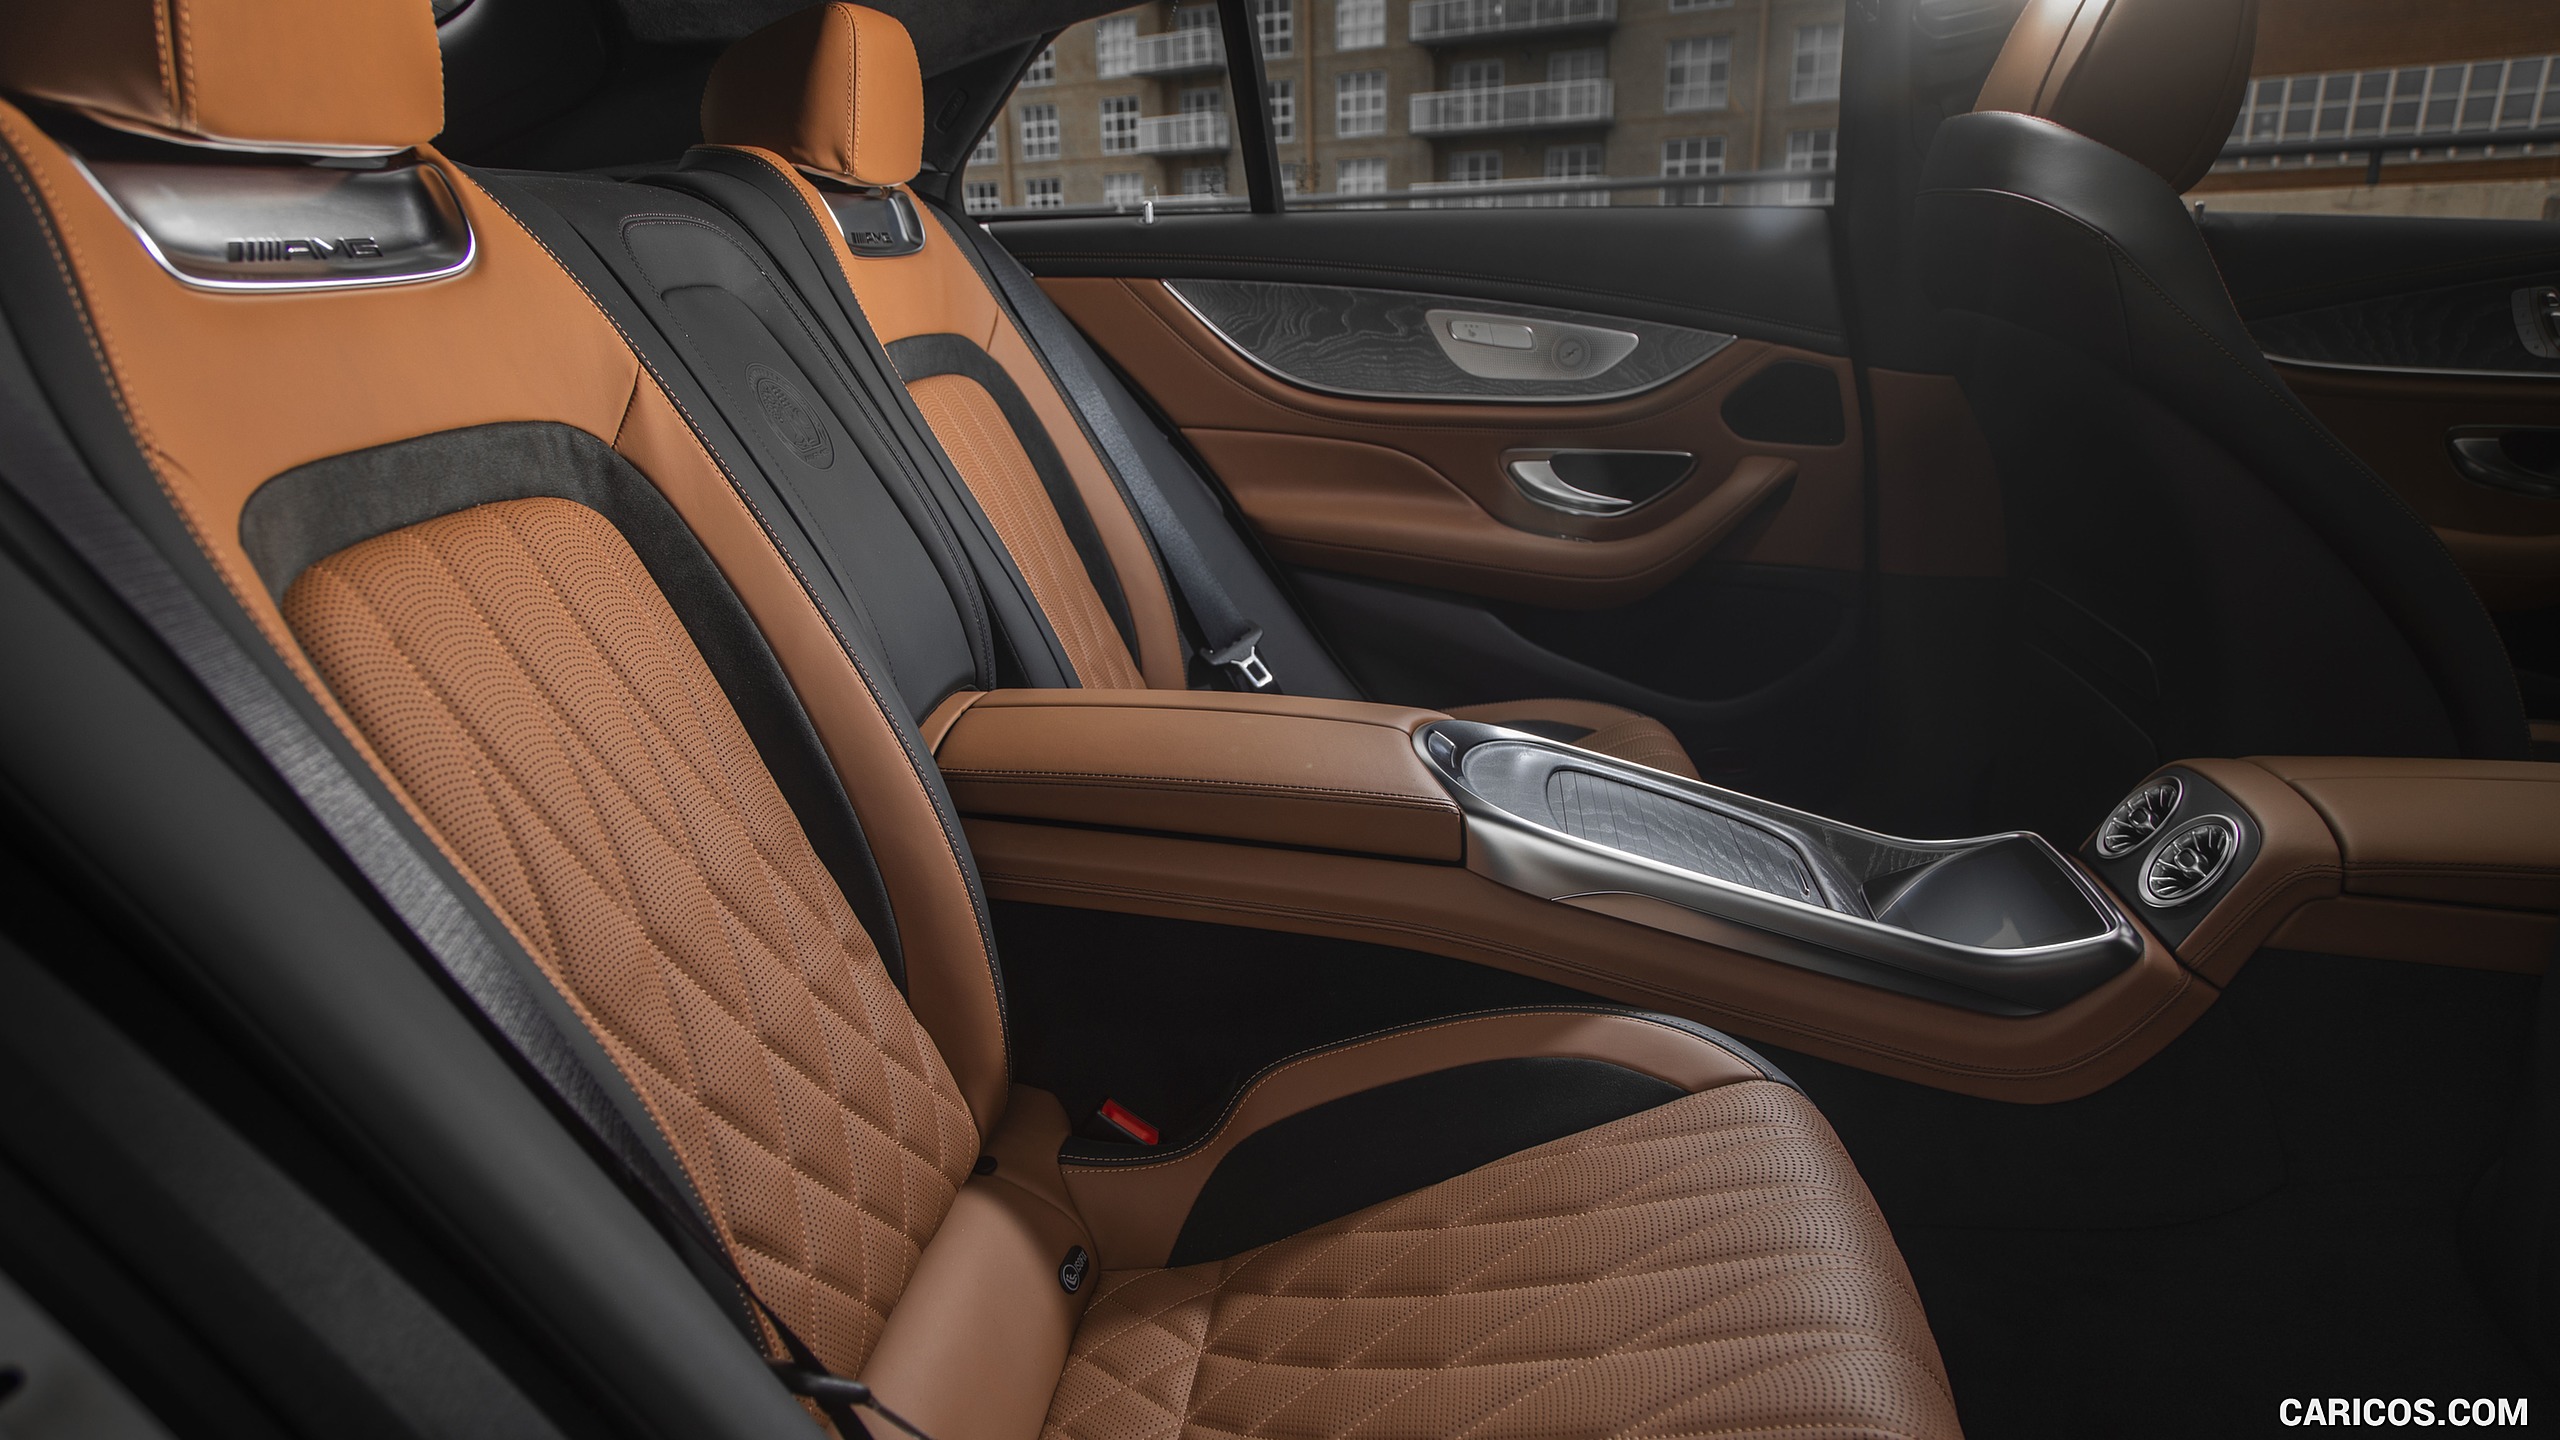 2019 Mercedes-AMG GT 53 4-Door Coupe (US-Spec) - Interior, Rear Seats, #366 of 427